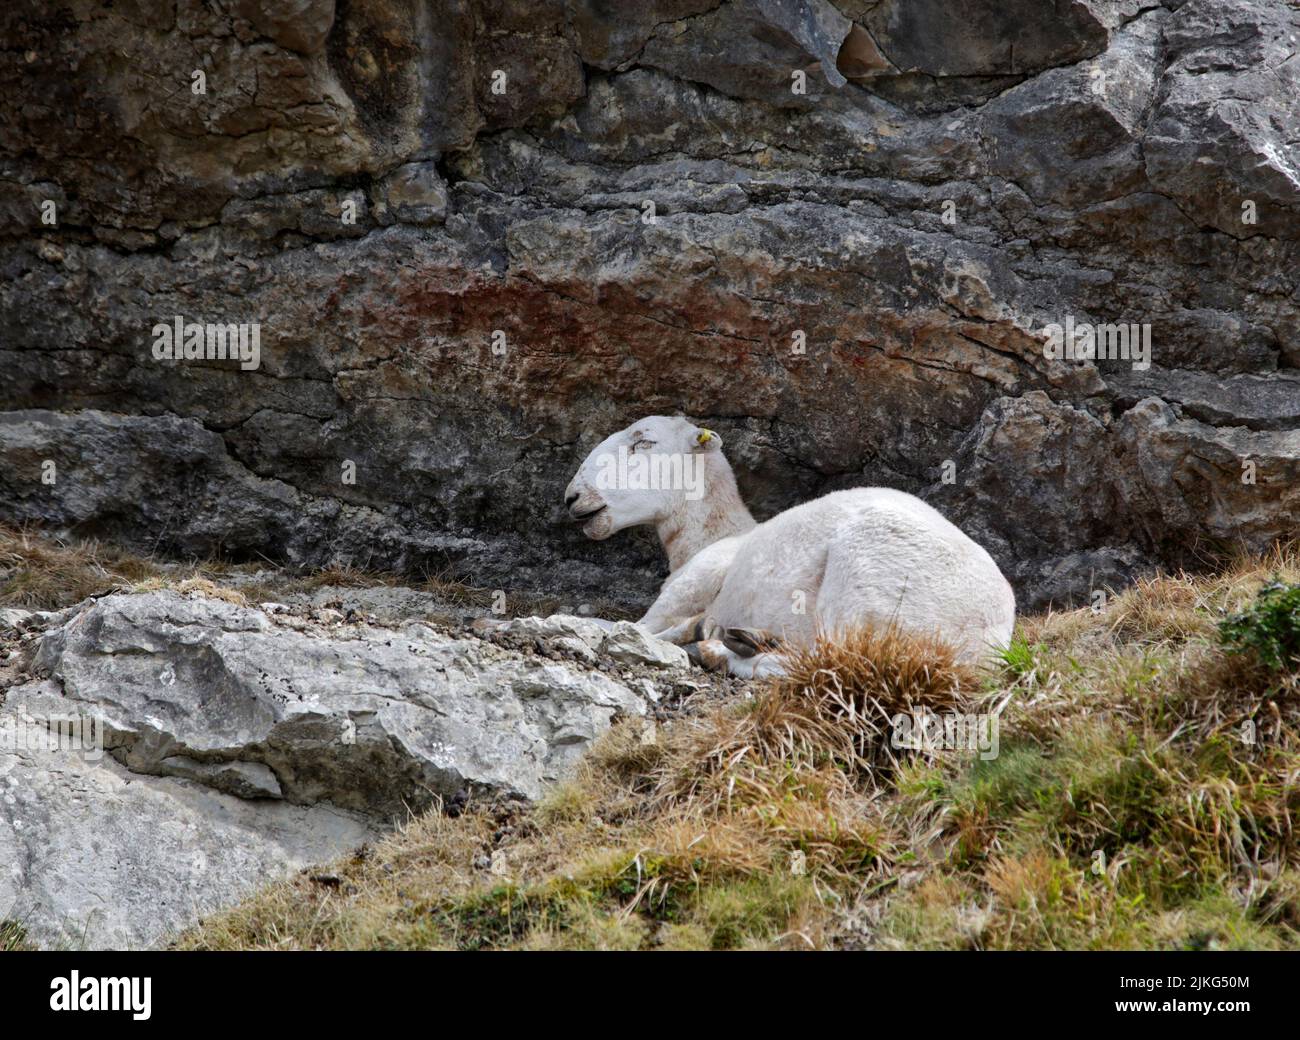 Shorn Sheep sheltering under rockface, Panorama Mountains, near Llangollen, Wales Stock Photo